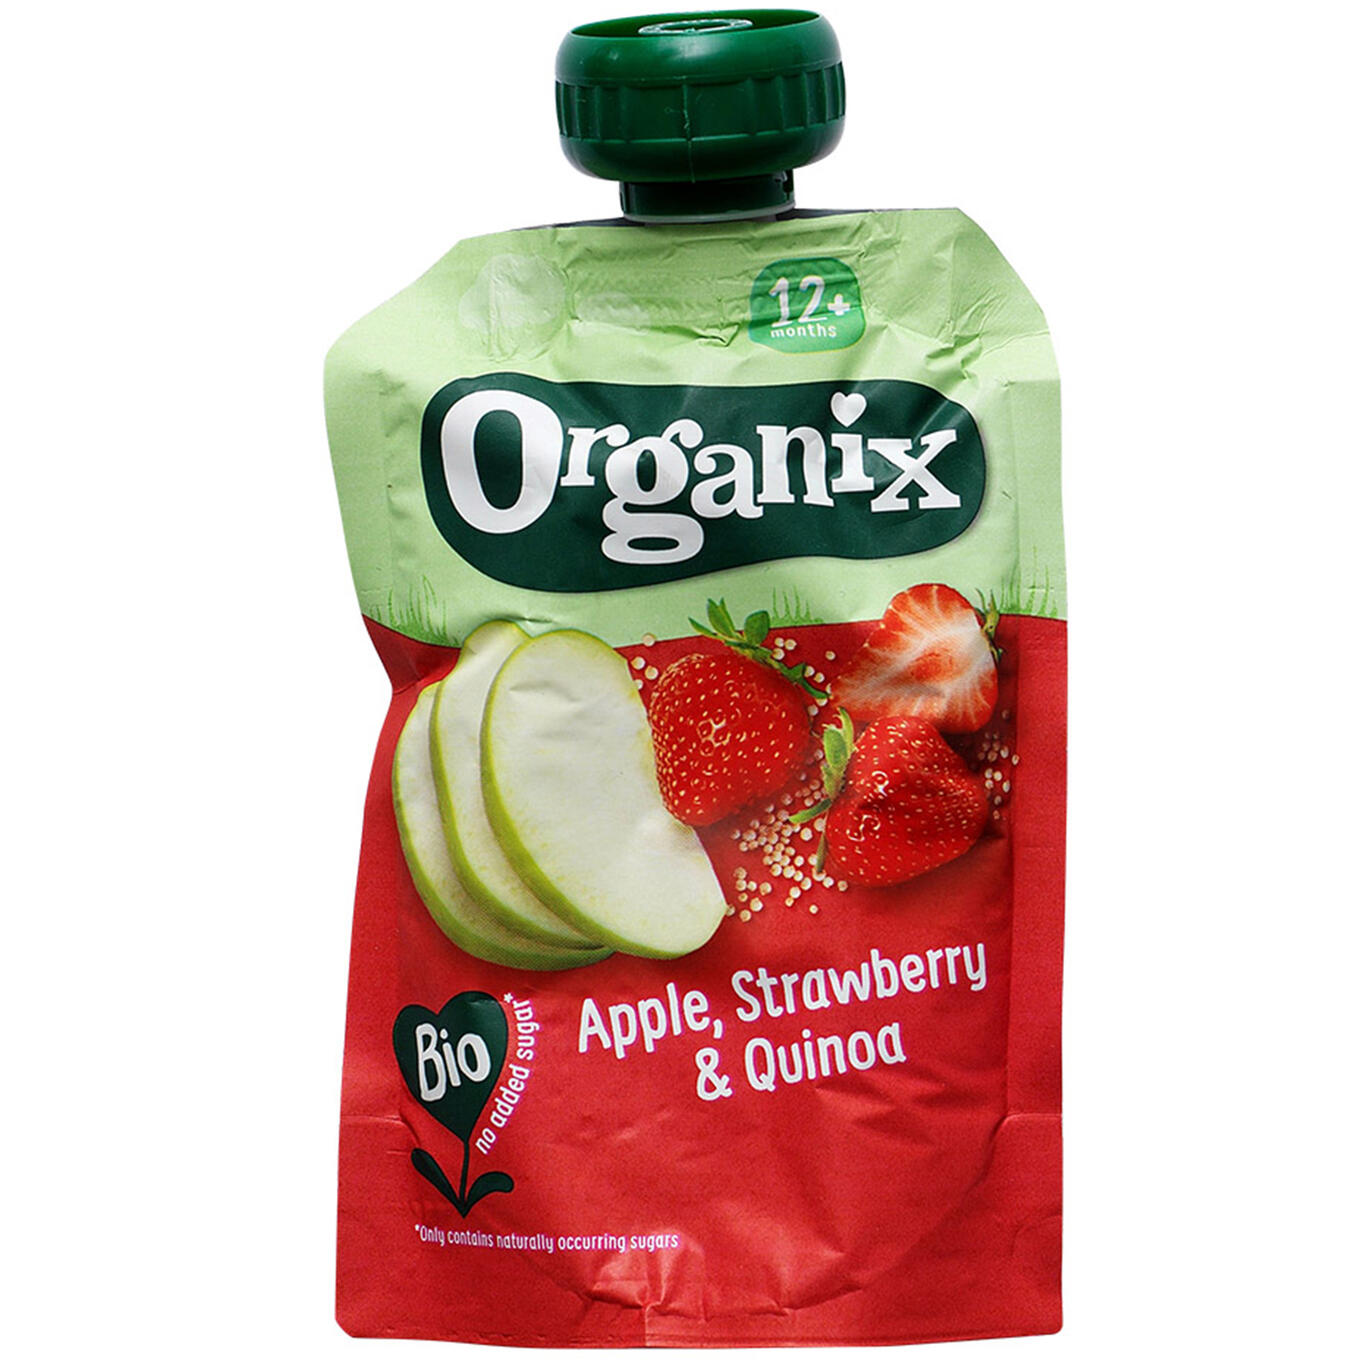 Apple, Strawberry & Quinoa Organix